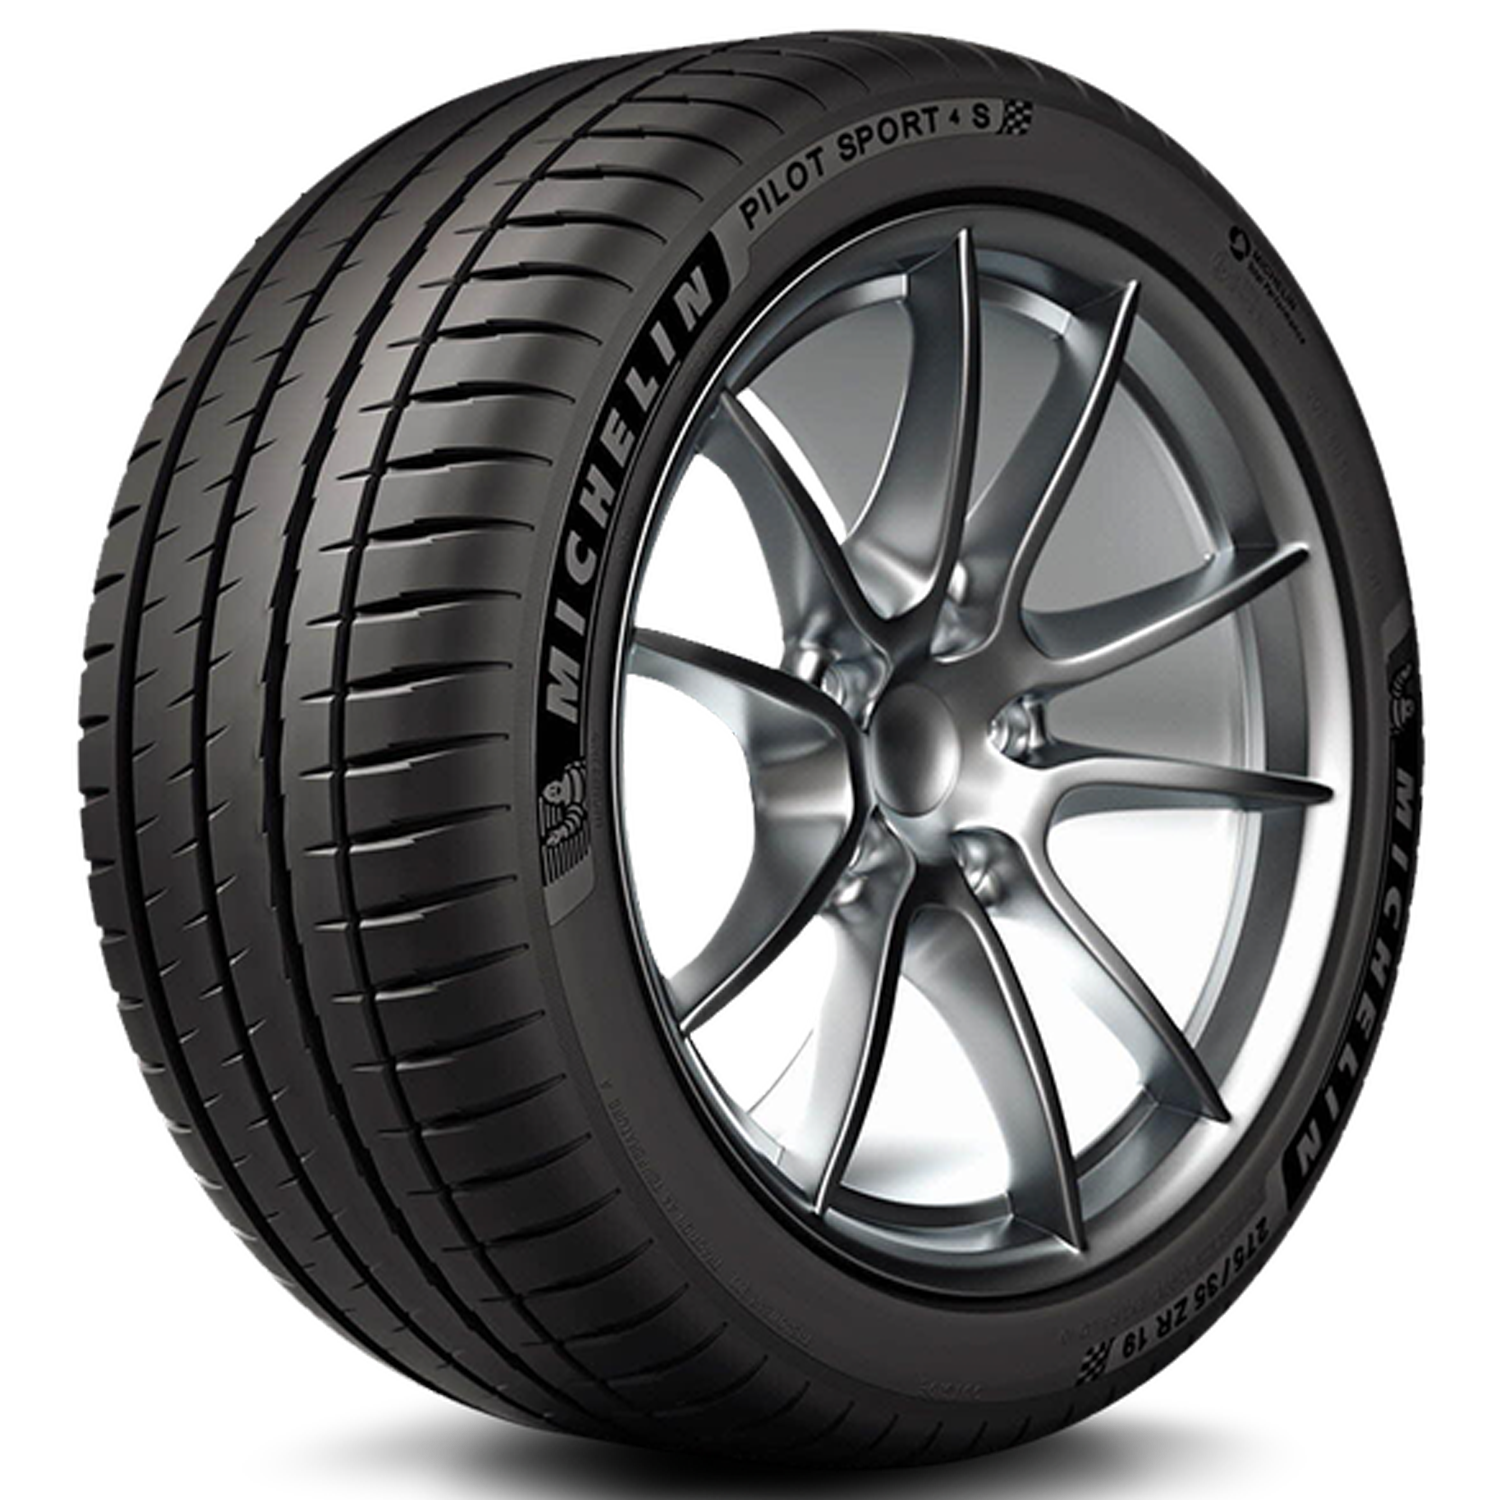 Michelin Pilot Sport 4 S 255/35-19 96 Y Tire - image 1 of 1